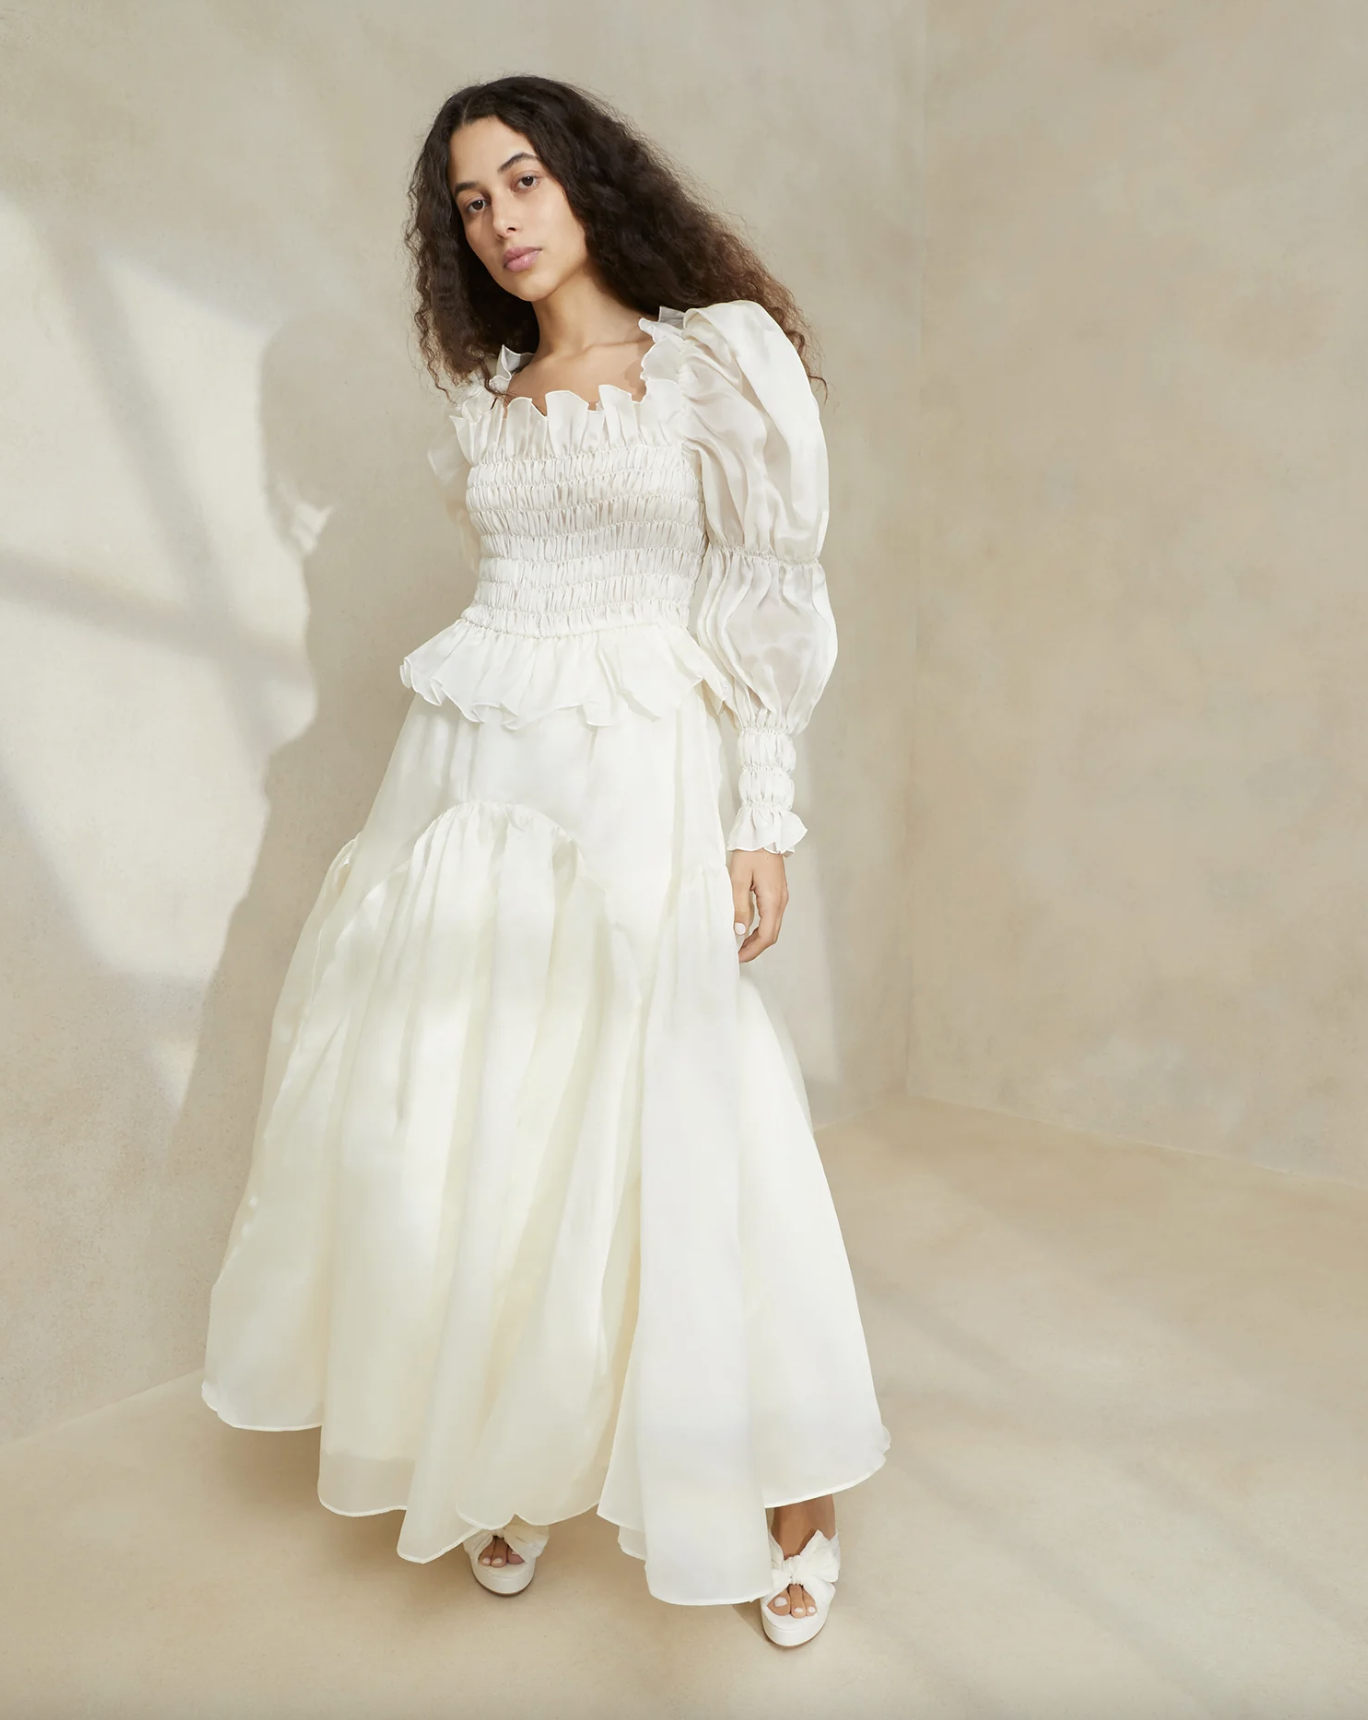 Luxury Wedding Dress · Jenny Fu - New York Wedding Photographer